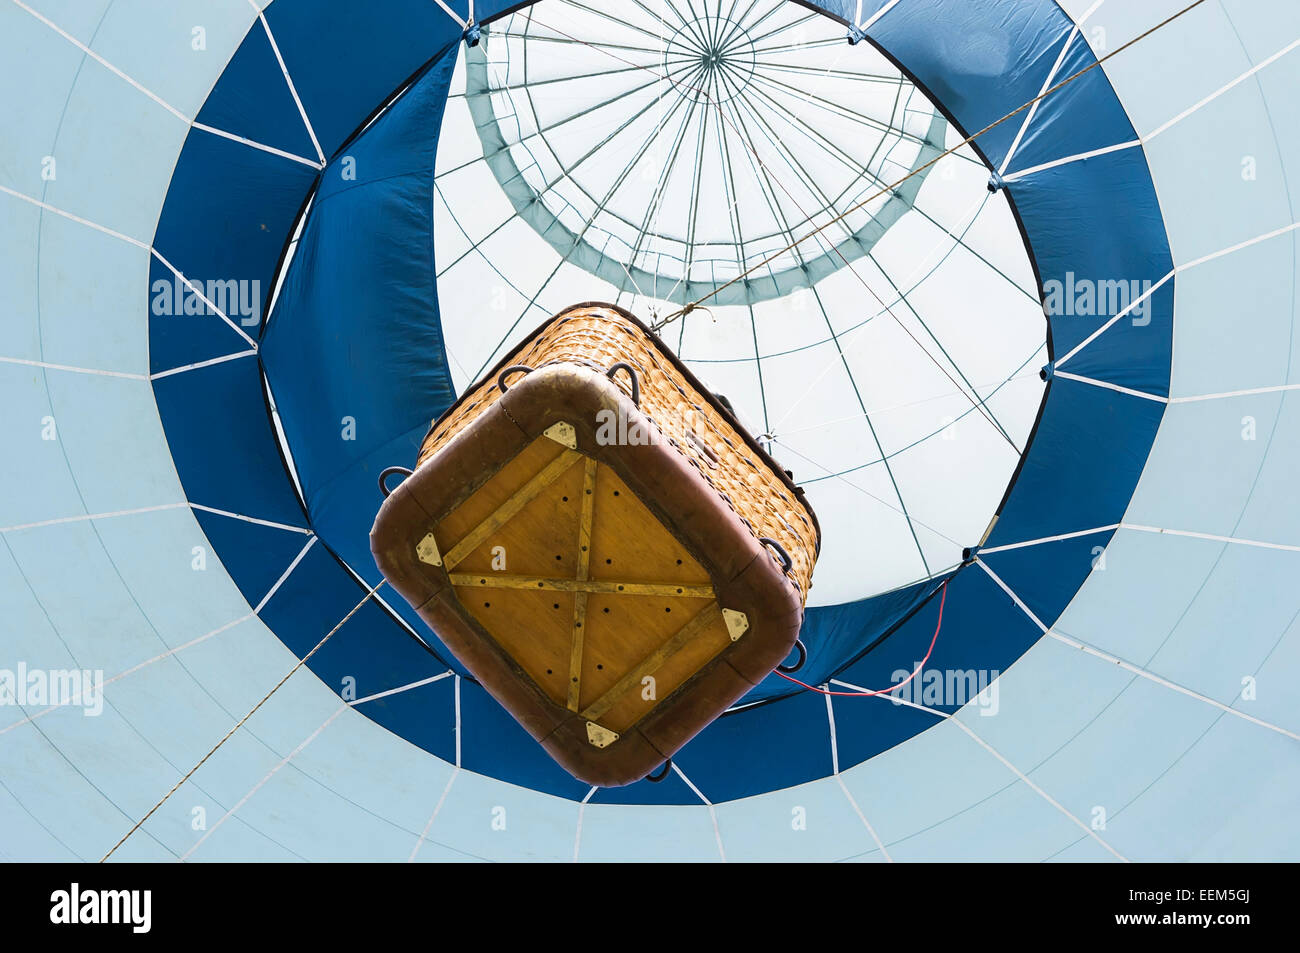 Abgehängte Heißluftballon mit Passagier Korb von unten betrachtet Stockfoto